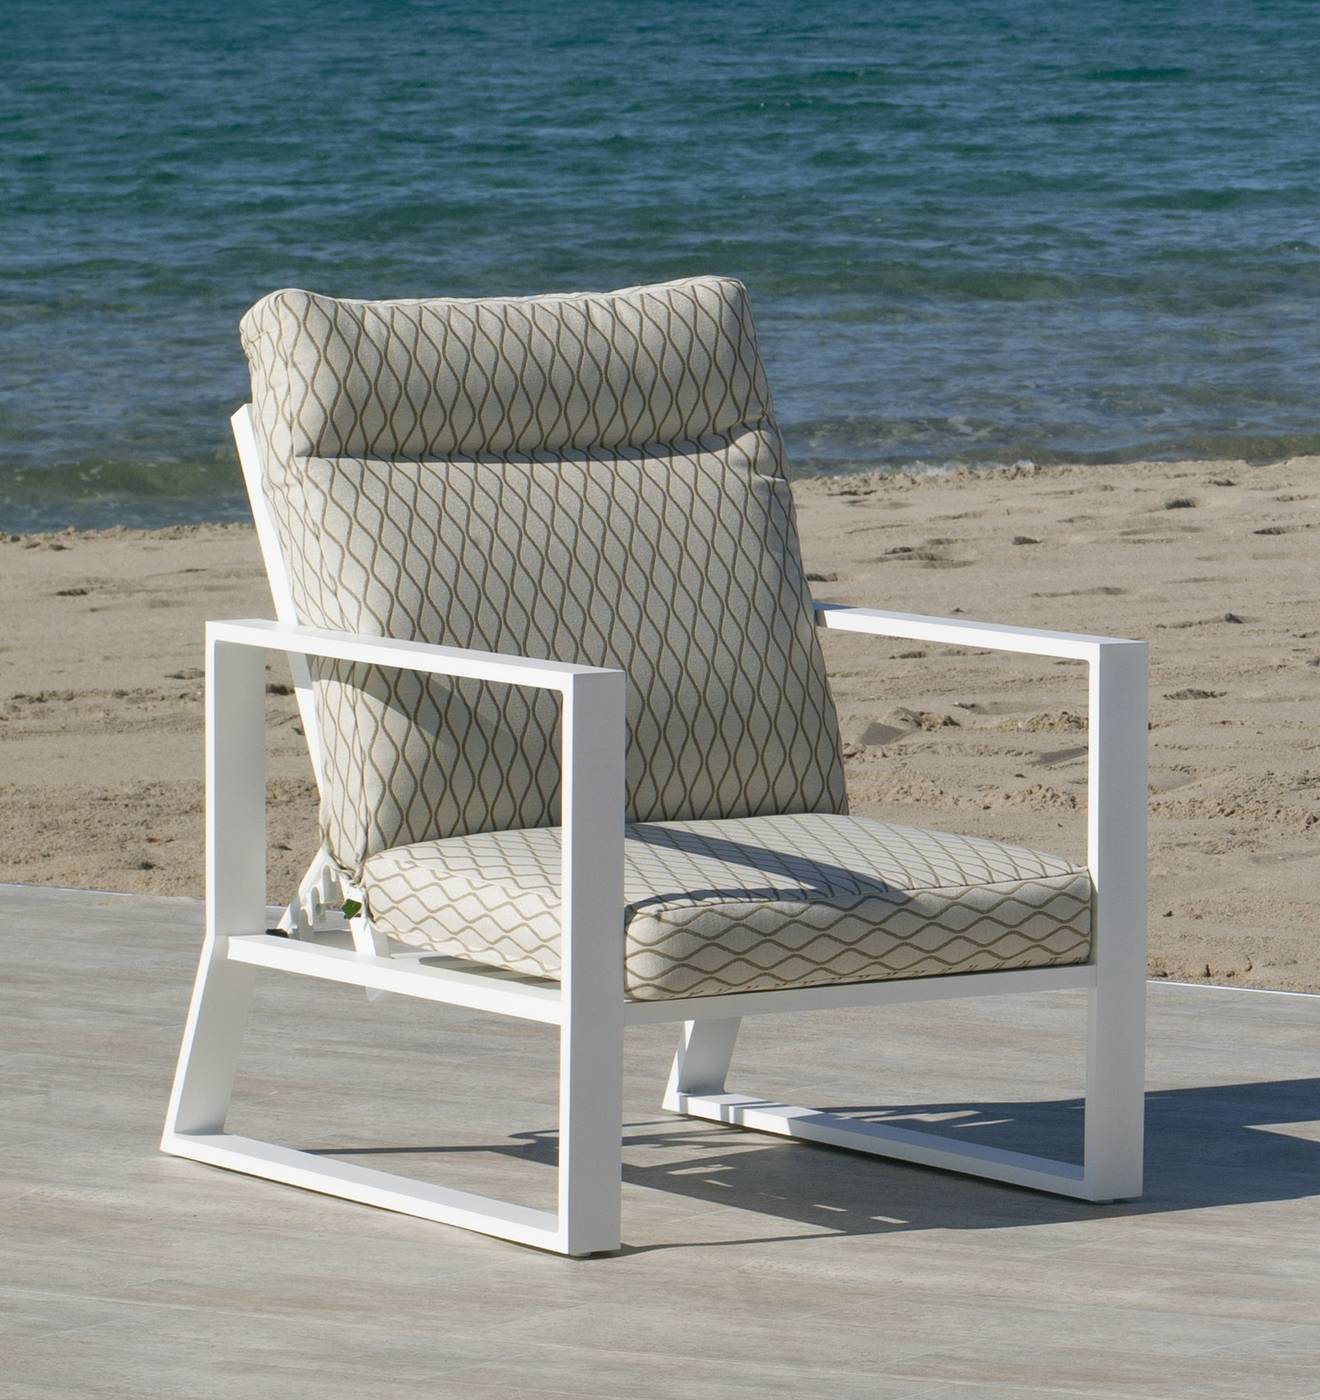 Set Aluminio Bolonia-620 - Conjunto aluminio: sofá 2 plazas + 2 sillones + mesa de centro + cojines. Respaldos reclinables. Colores: blanco, antracita o bronce.